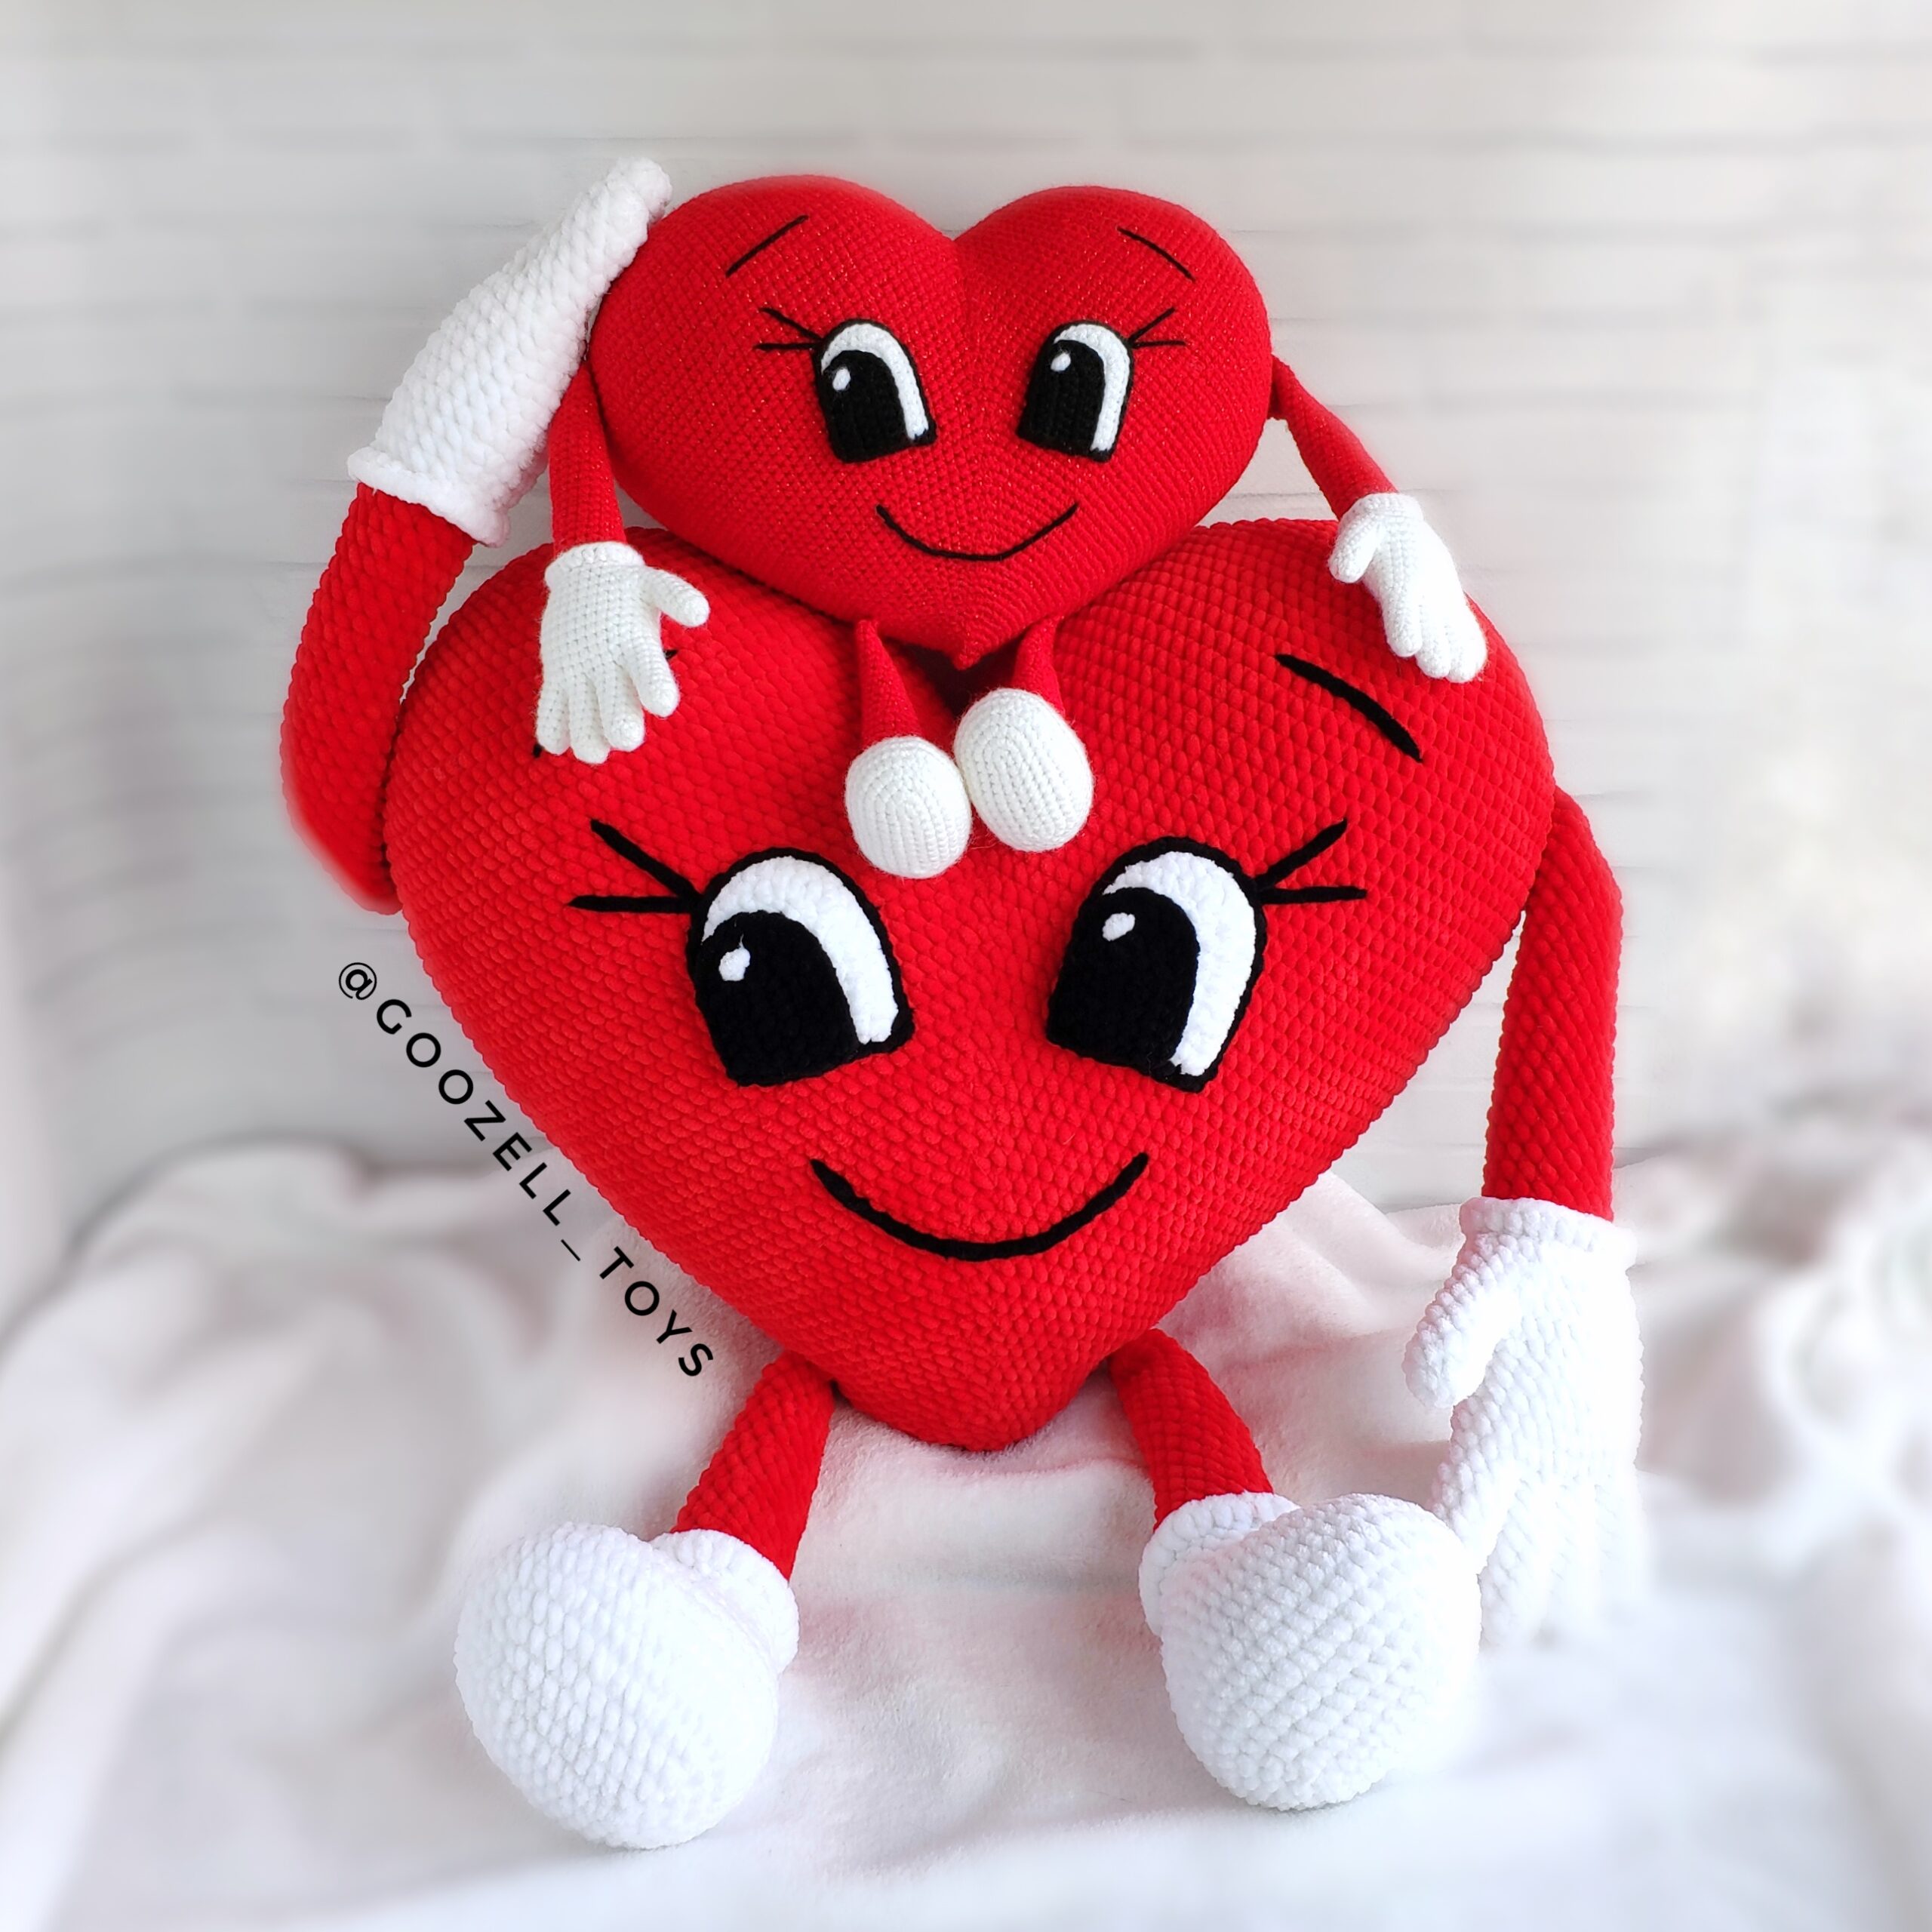 Crochet Leggy Heart Plushie | Handmade Heart Stuffed Animal